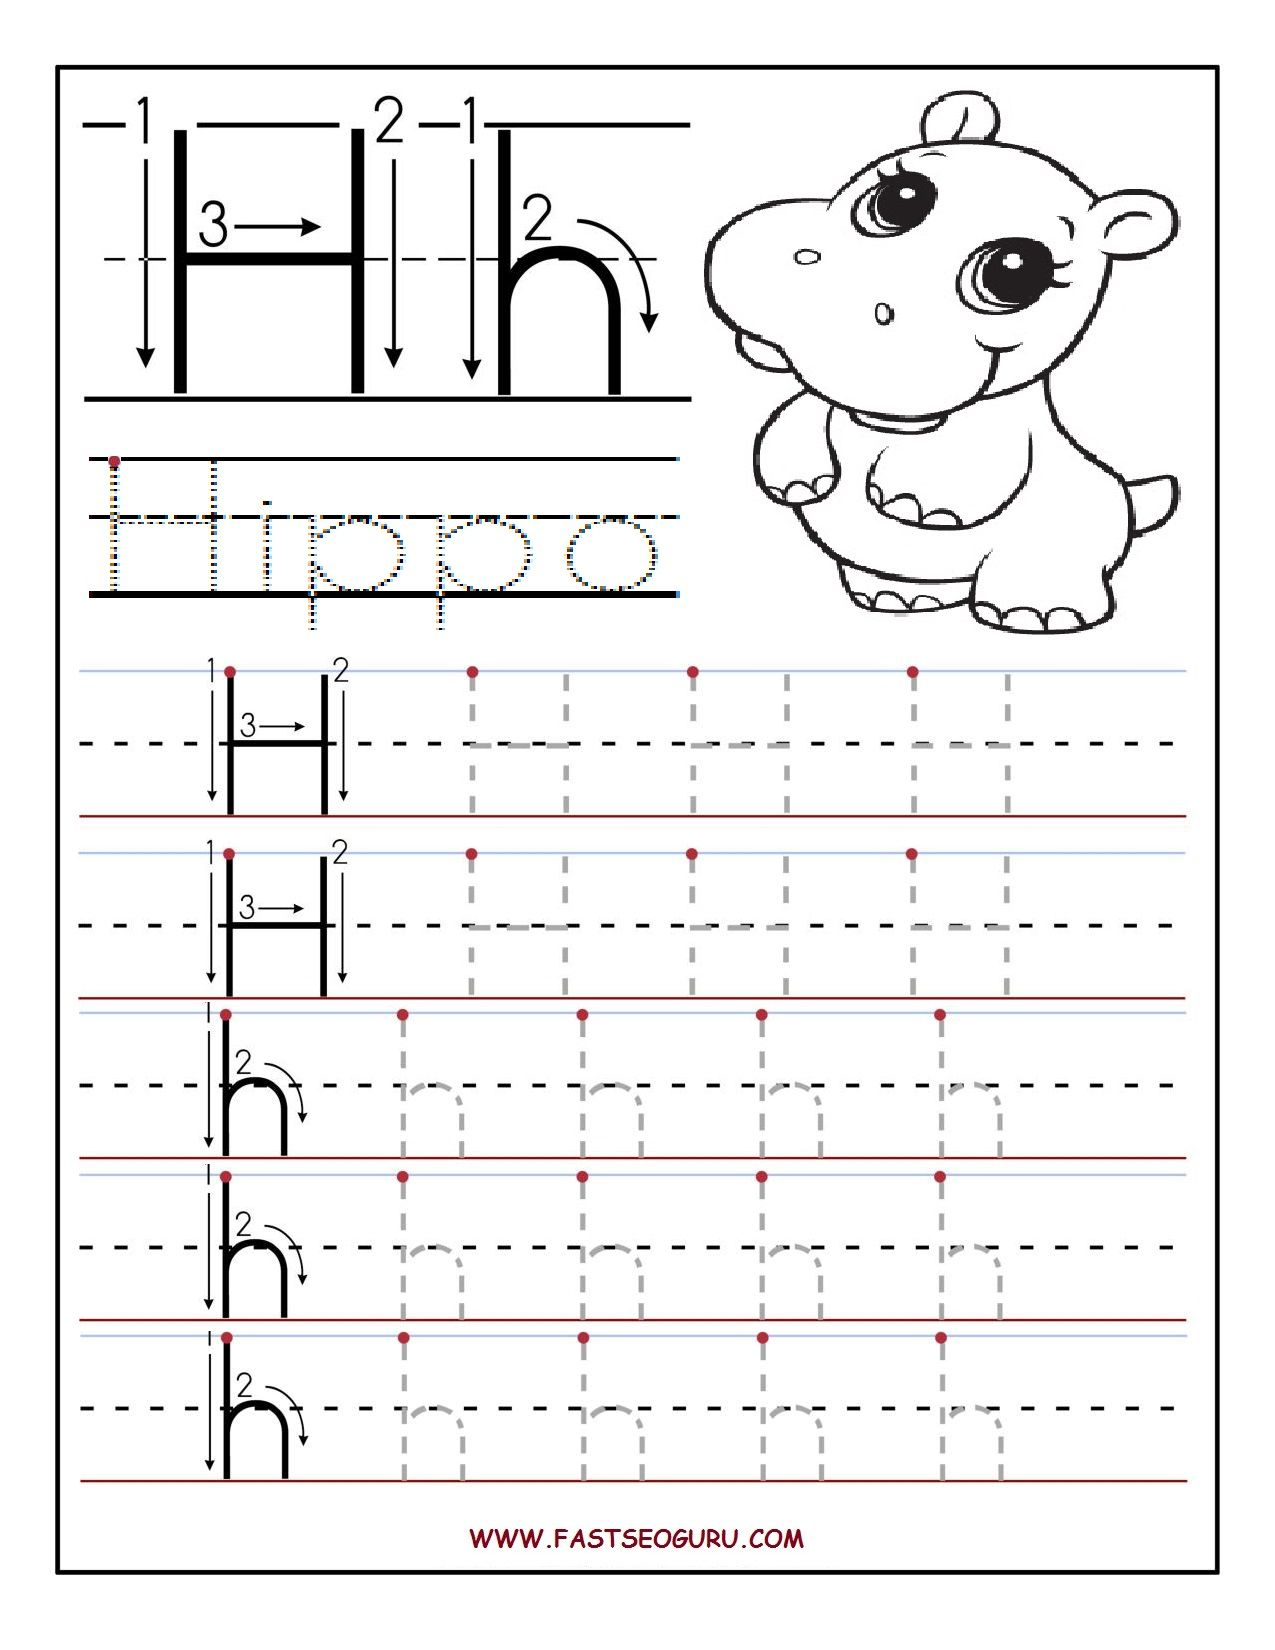 Printable Letter H Tracing Worksheets For Preschool inside Letter H Worksheets Free Printables